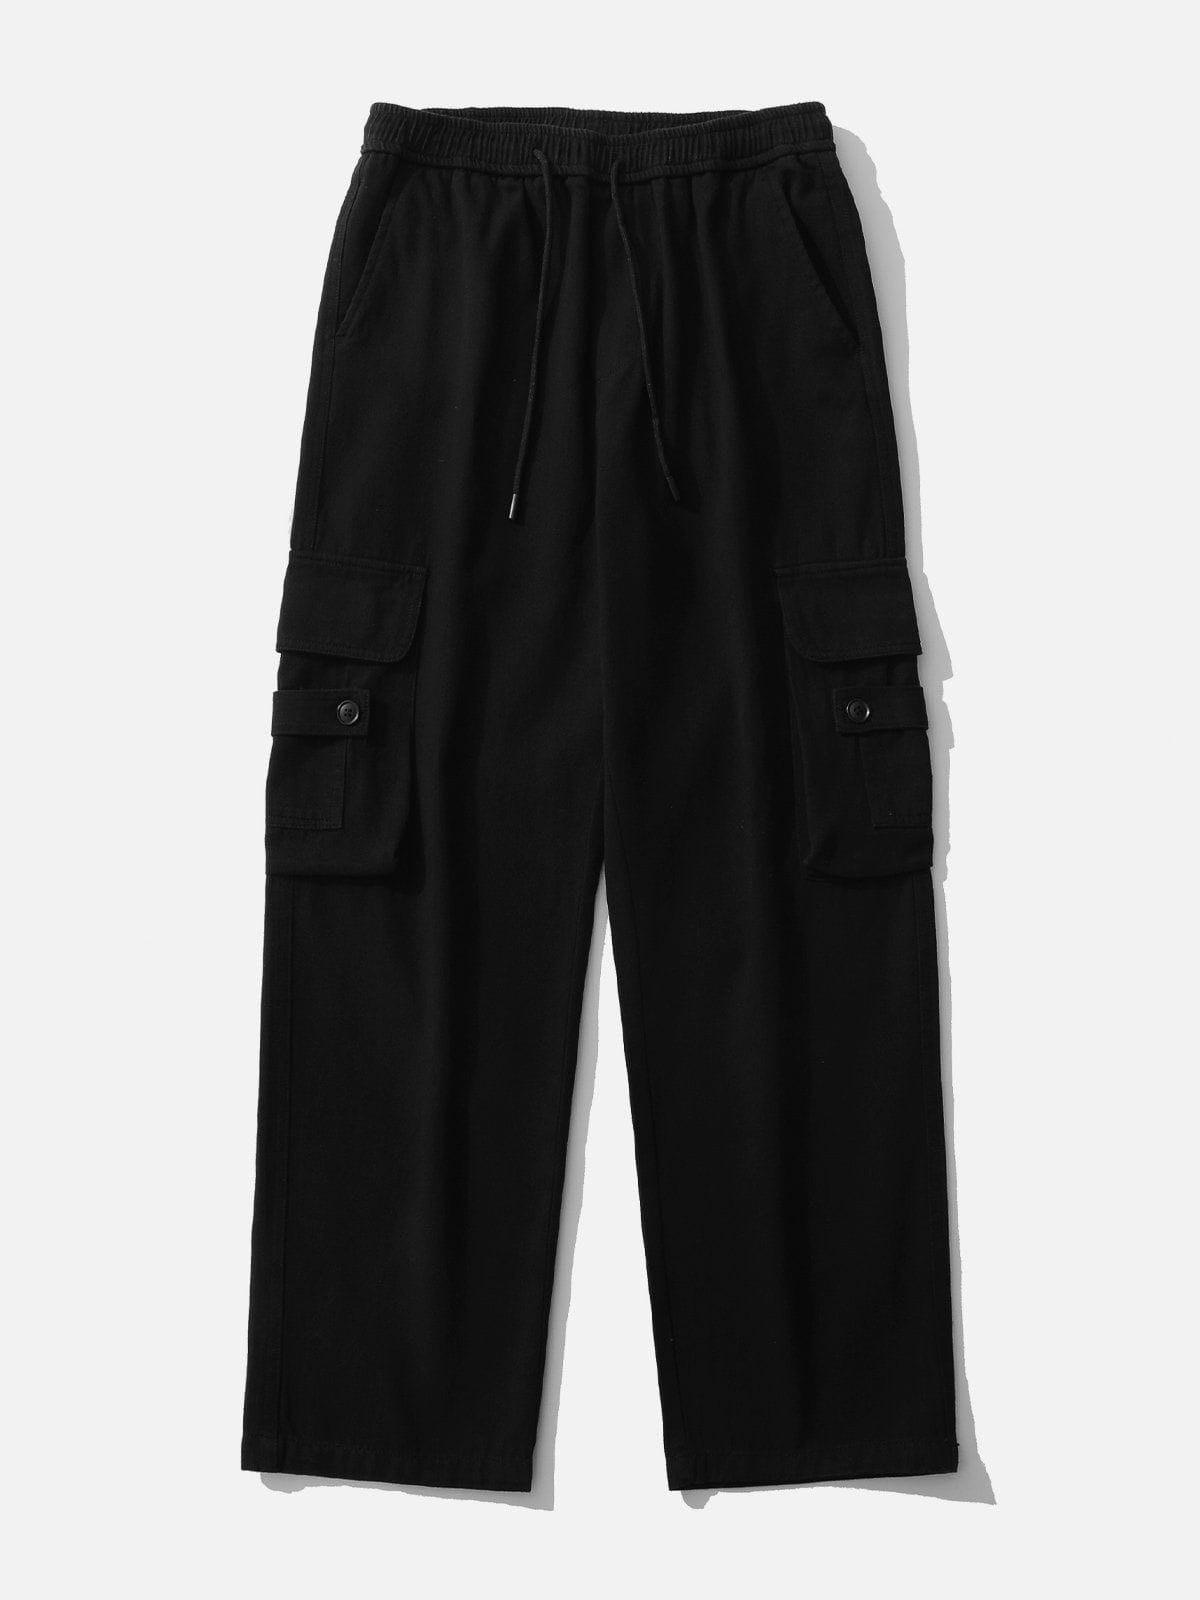 Eprezzy® - Large Multi-Pocket Drawstring Cargo Pants Streetwear Fashion - eprezzy.com